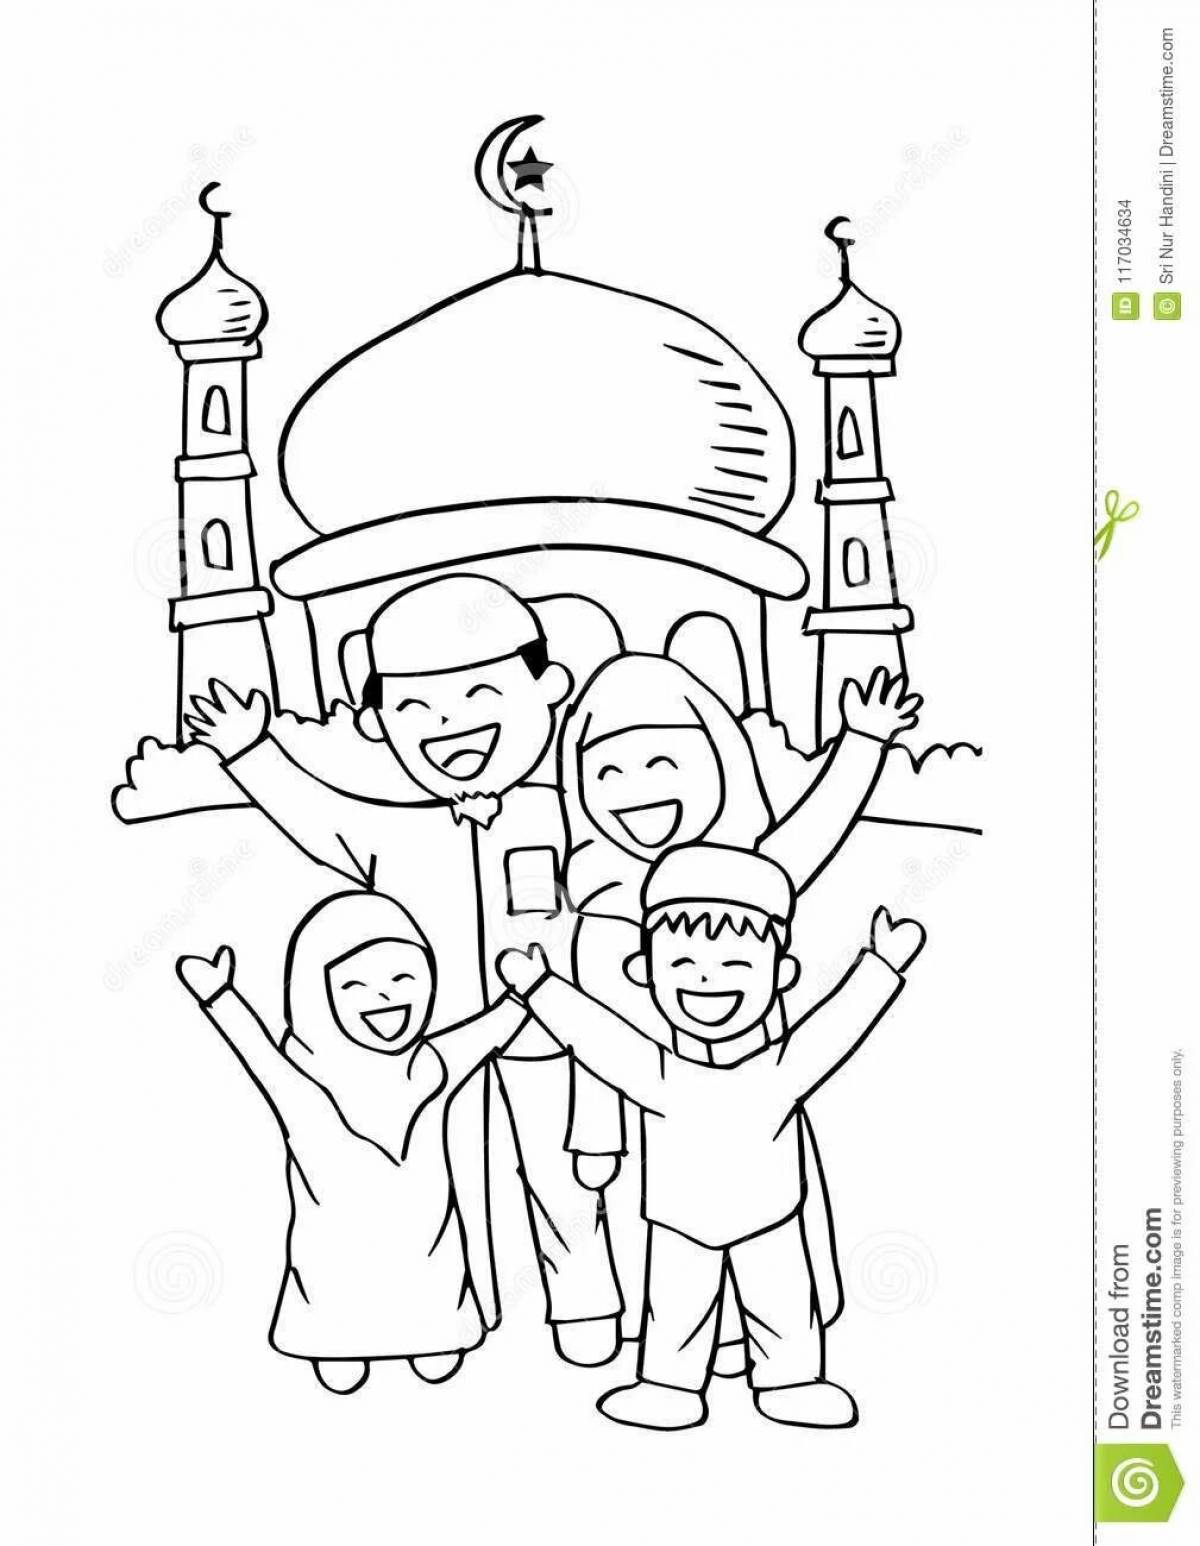 Muslim family #23